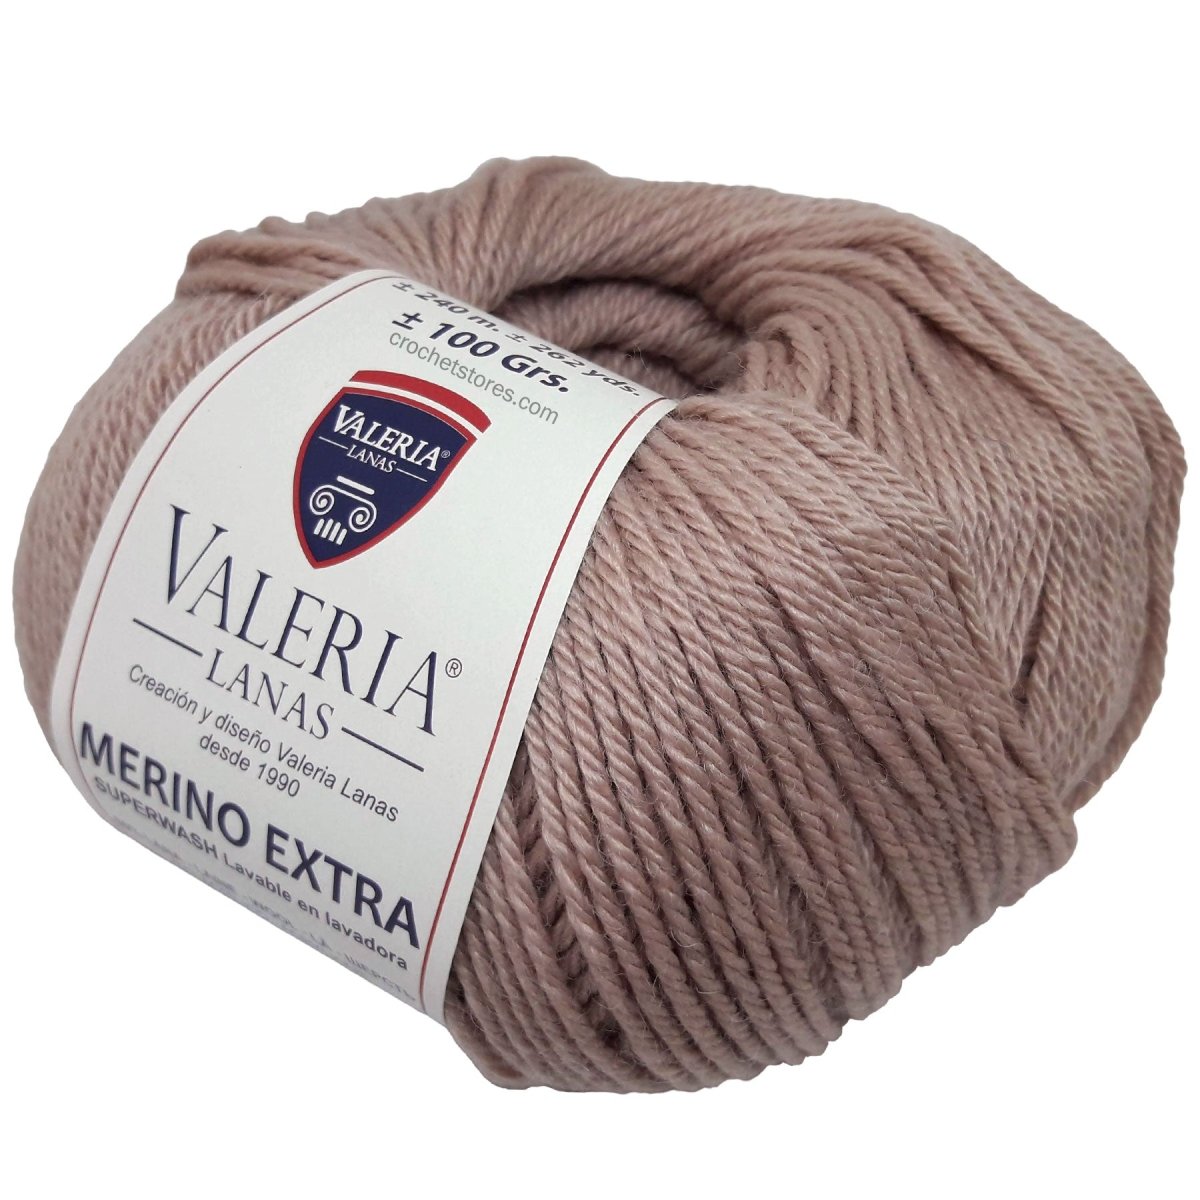 MERINO EXTRA - Crochetstores1009-0578435411406776